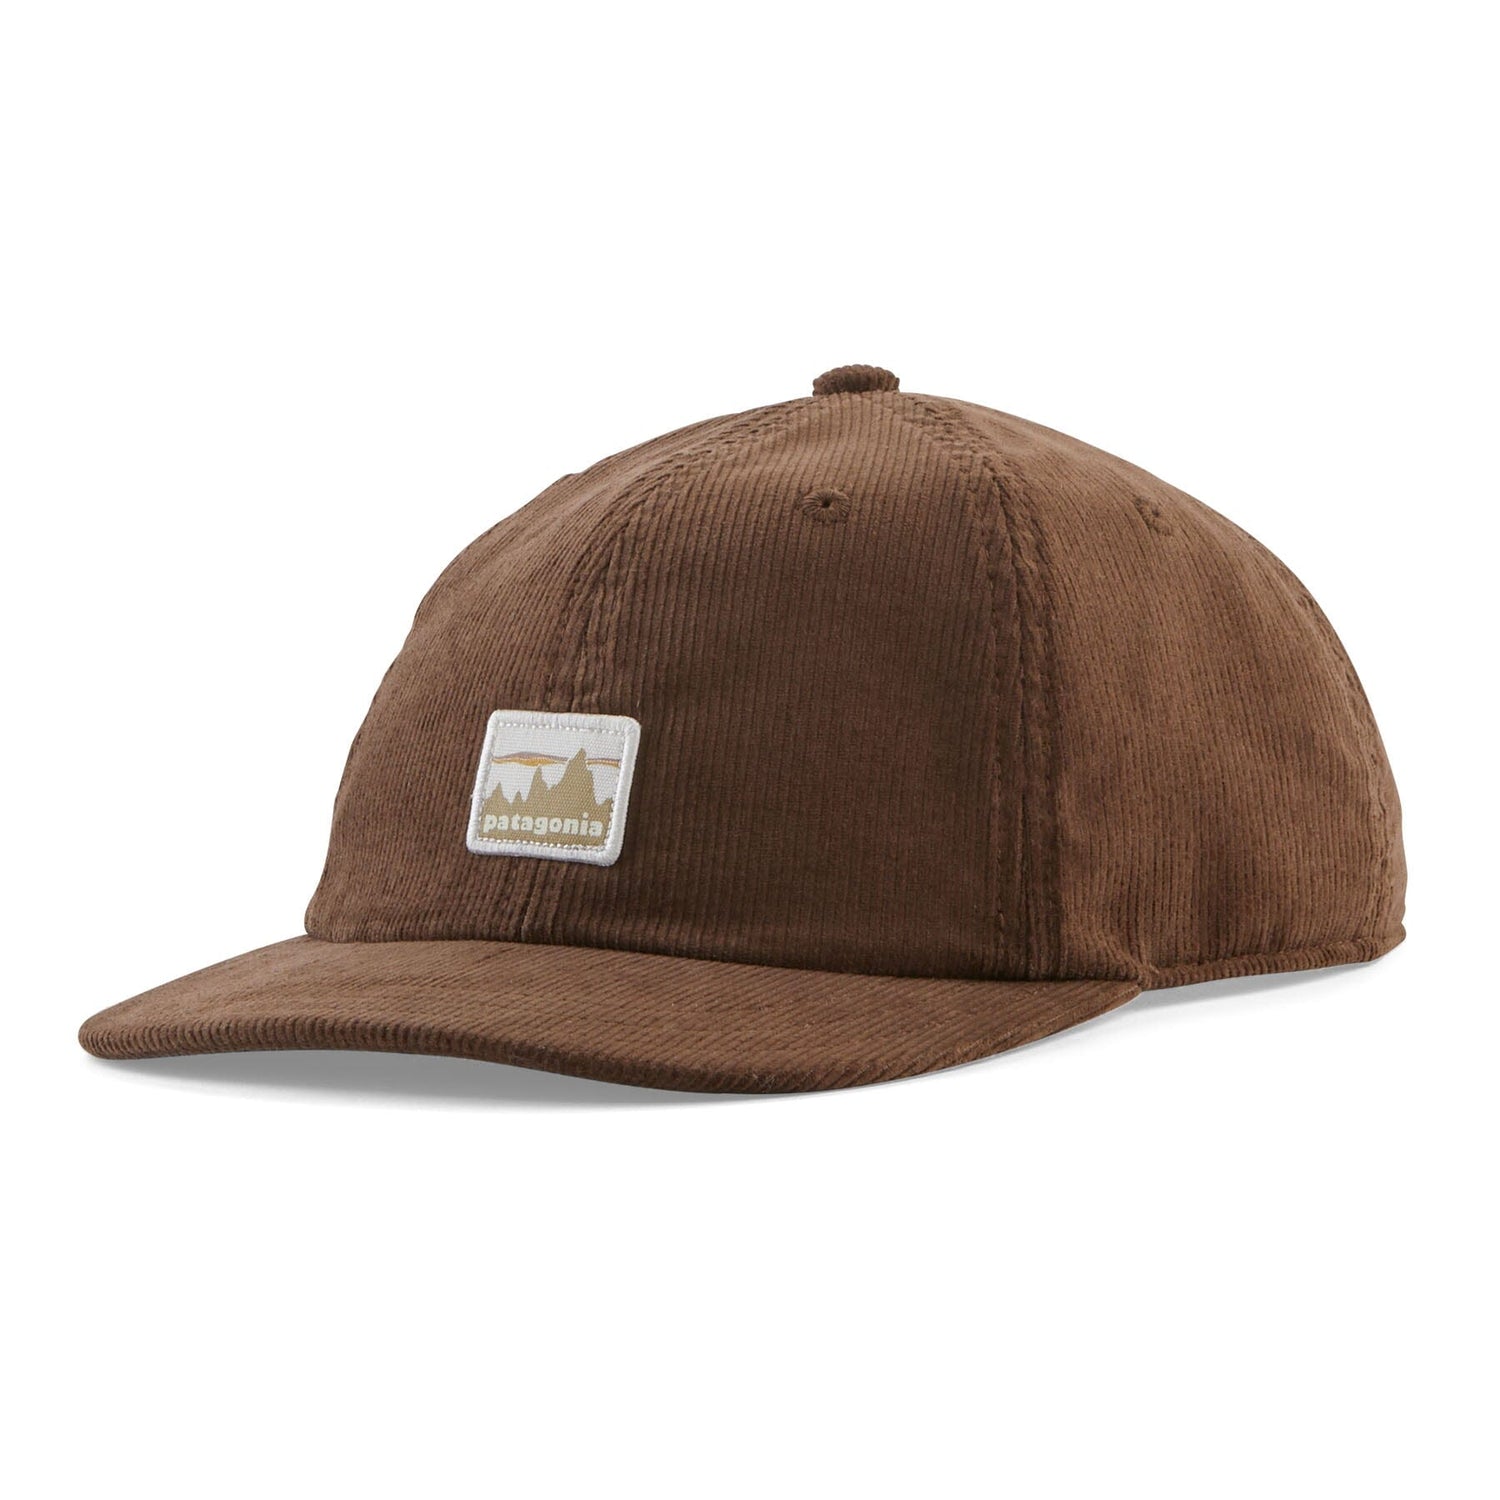 Patagonia Corduroy Cap - Organic Cotton '73 Skyline: Topsoil Brown Headwear